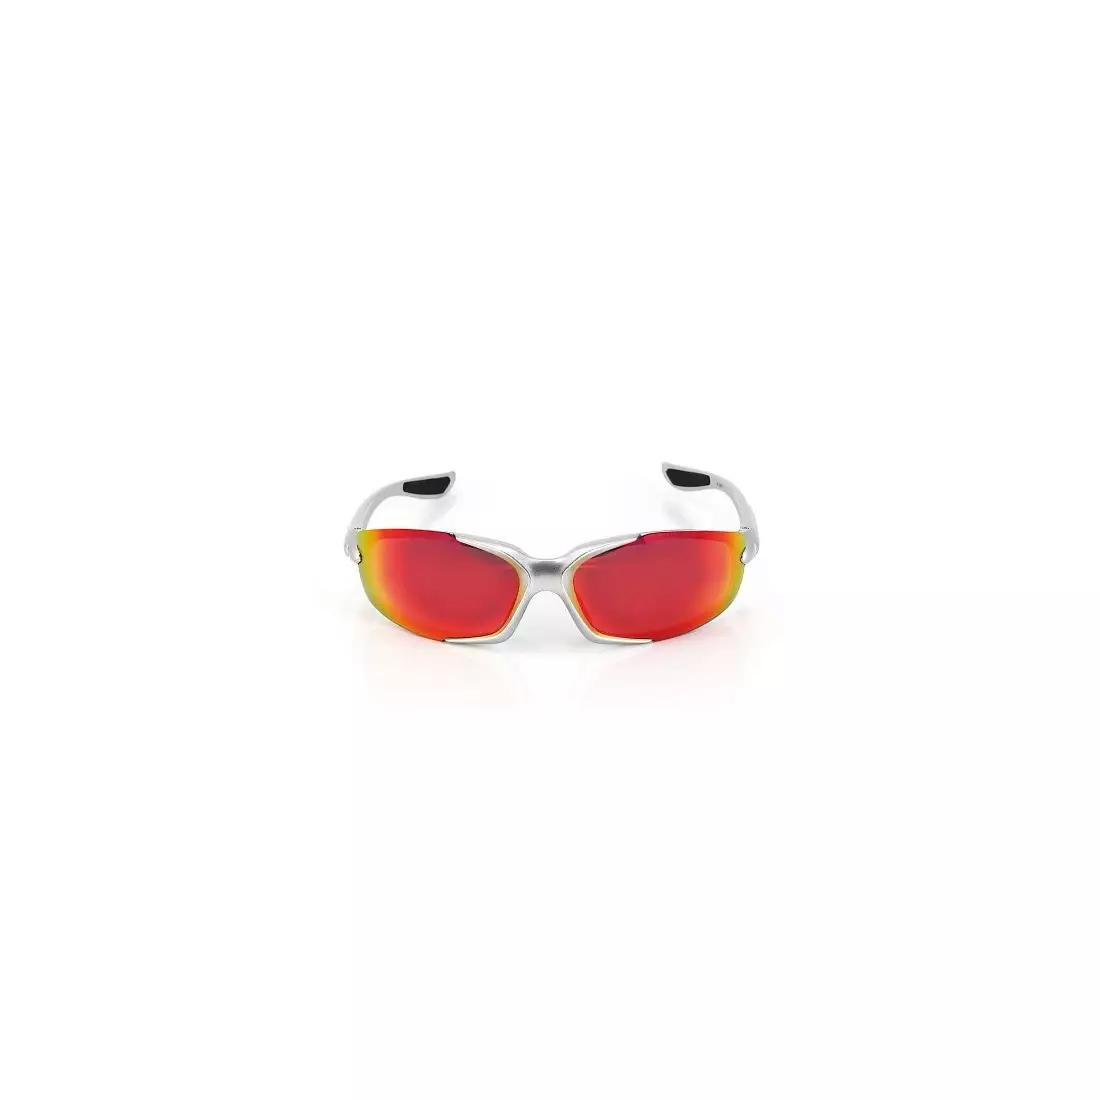 XLC GALAPAGOS - sportovní brýle - 156600 - barva: Stříbrná